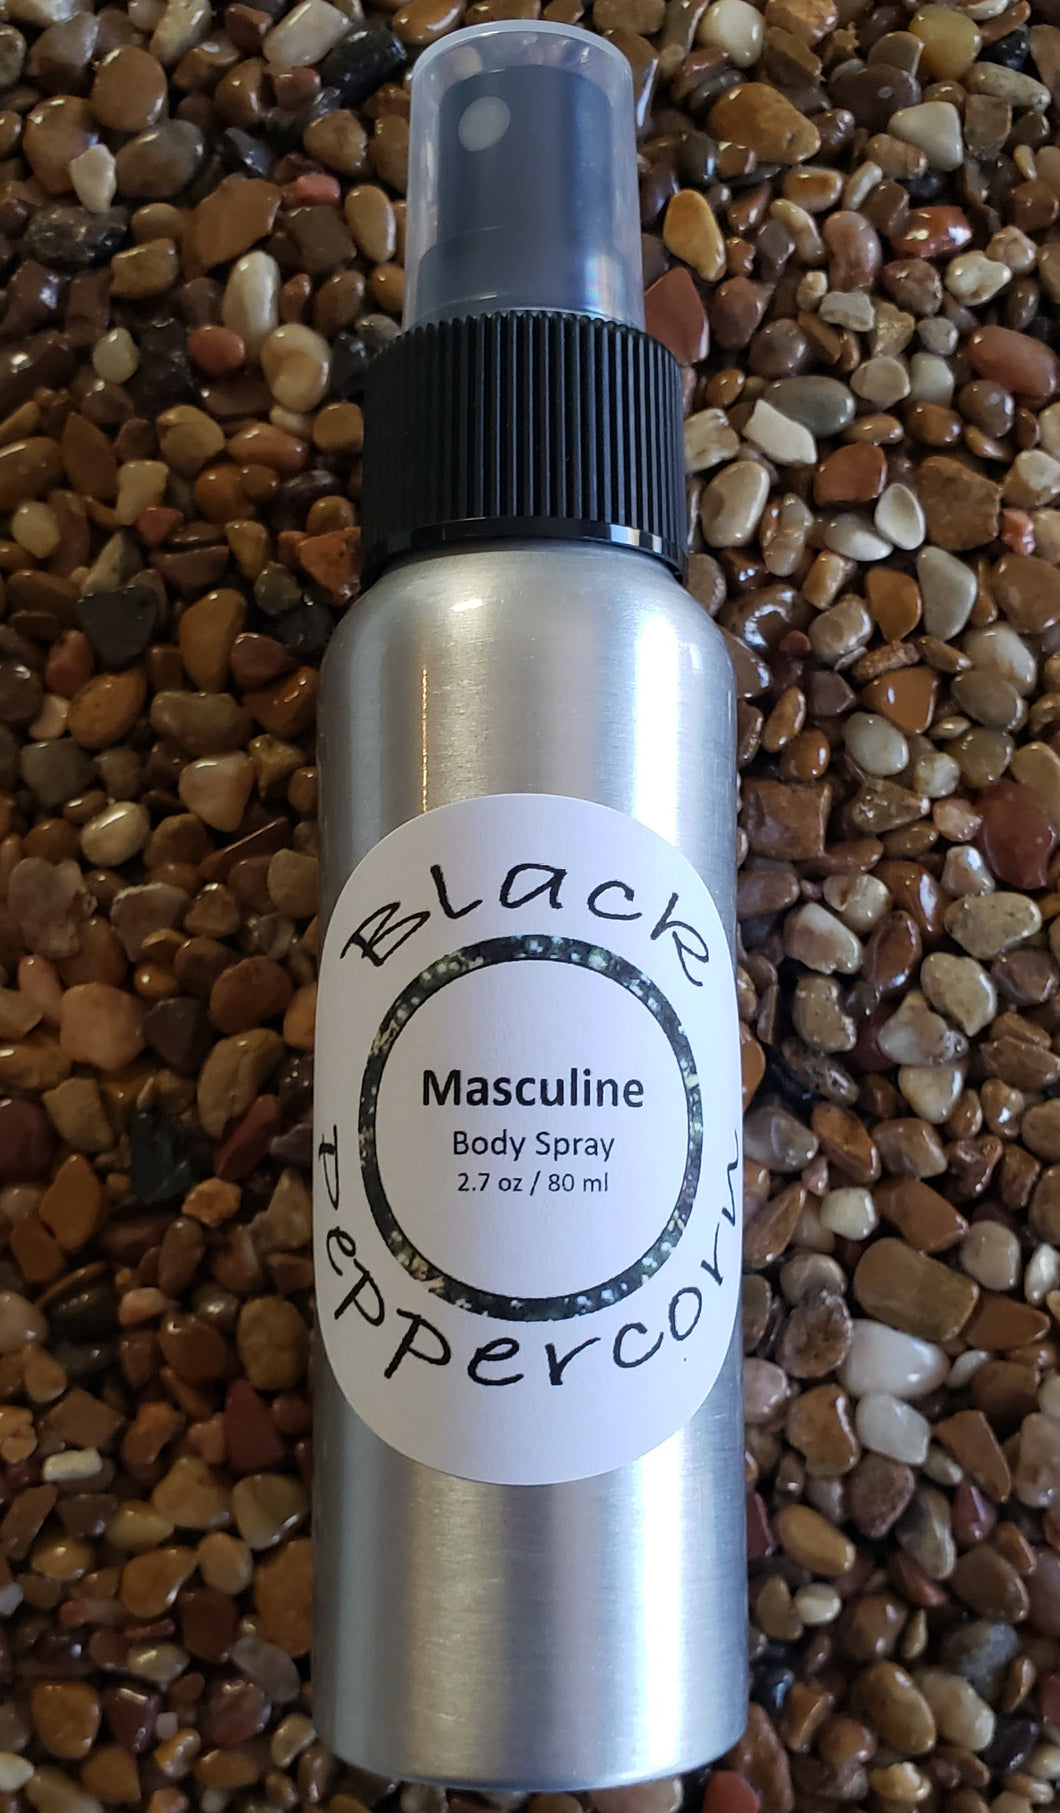 Masculine Body Spray - 2.7 oz / 80 ml